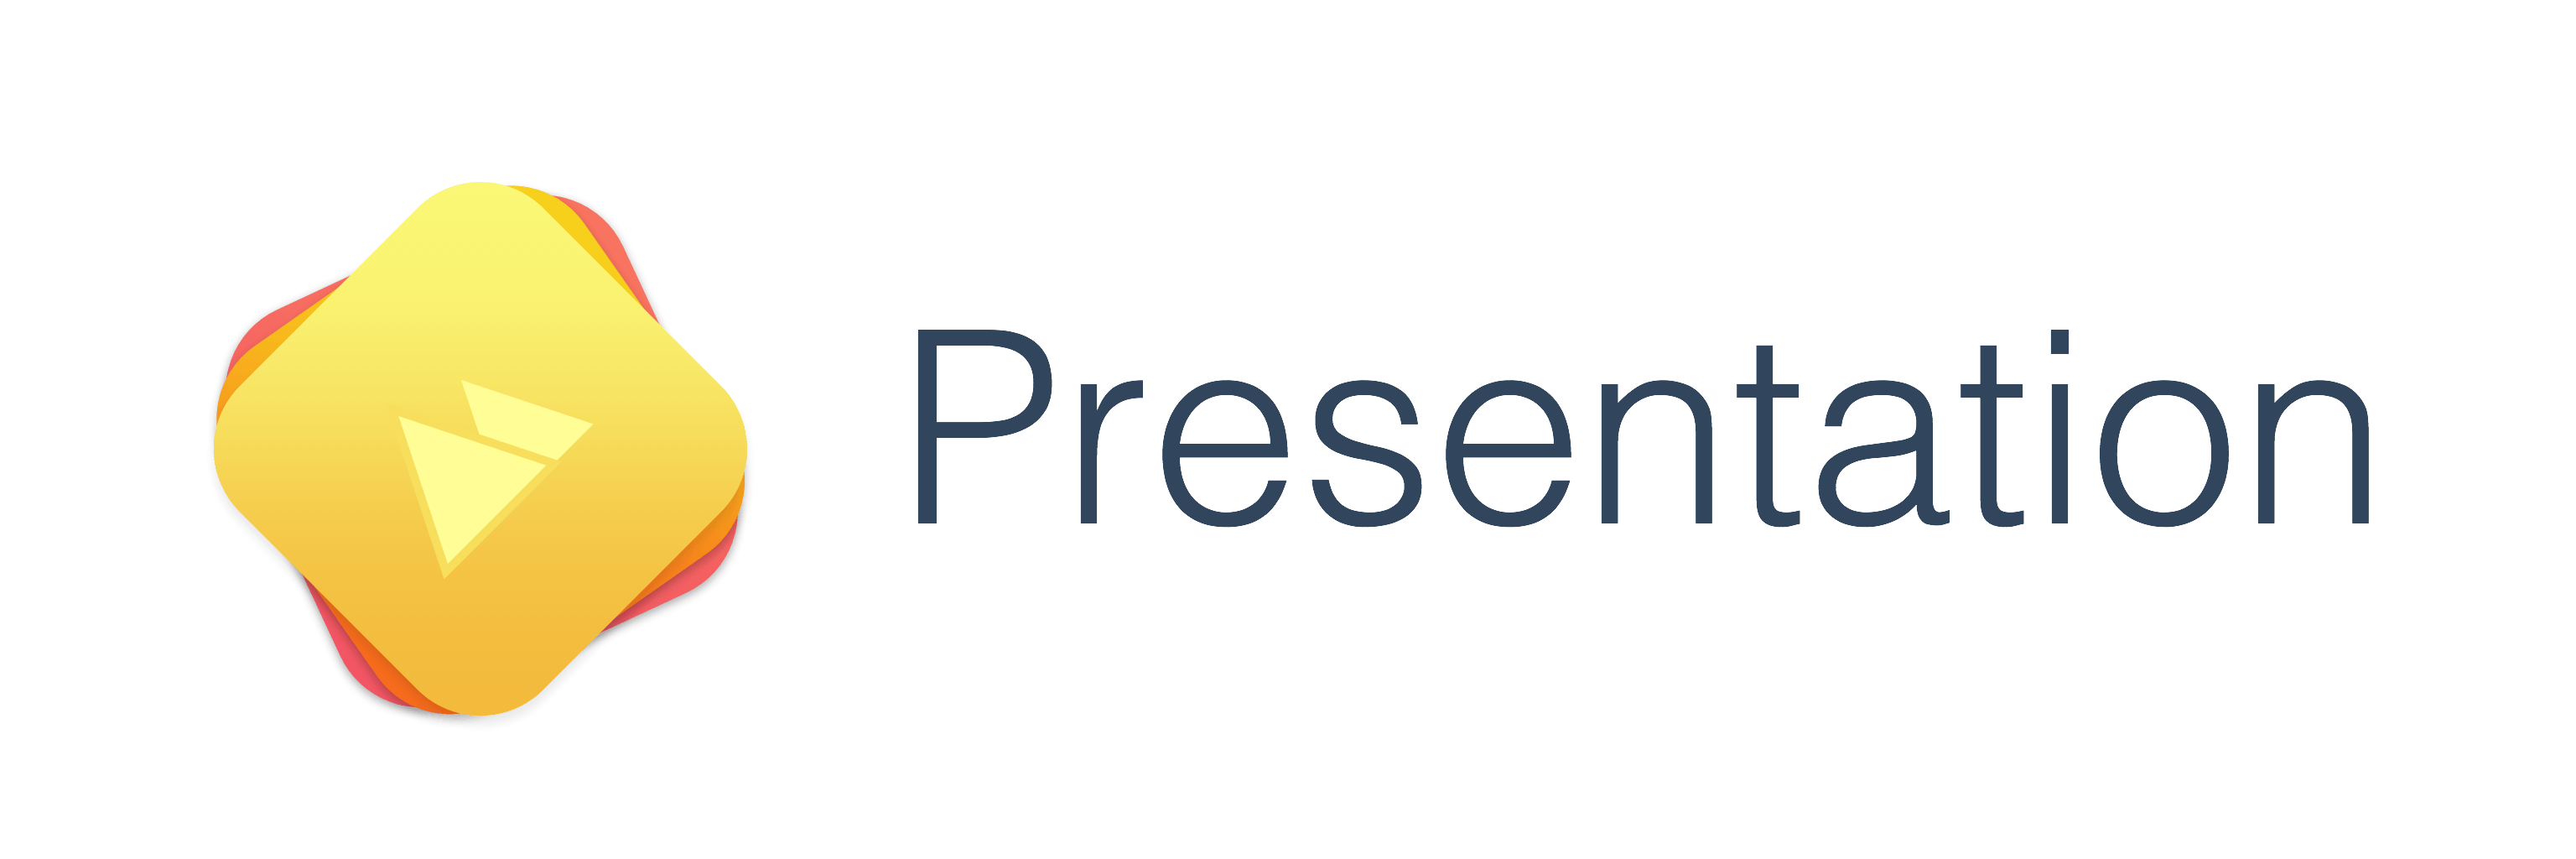 Google Presentation Logo - Presentation/README.md at master · hyperoslo/Presentation · GitHub